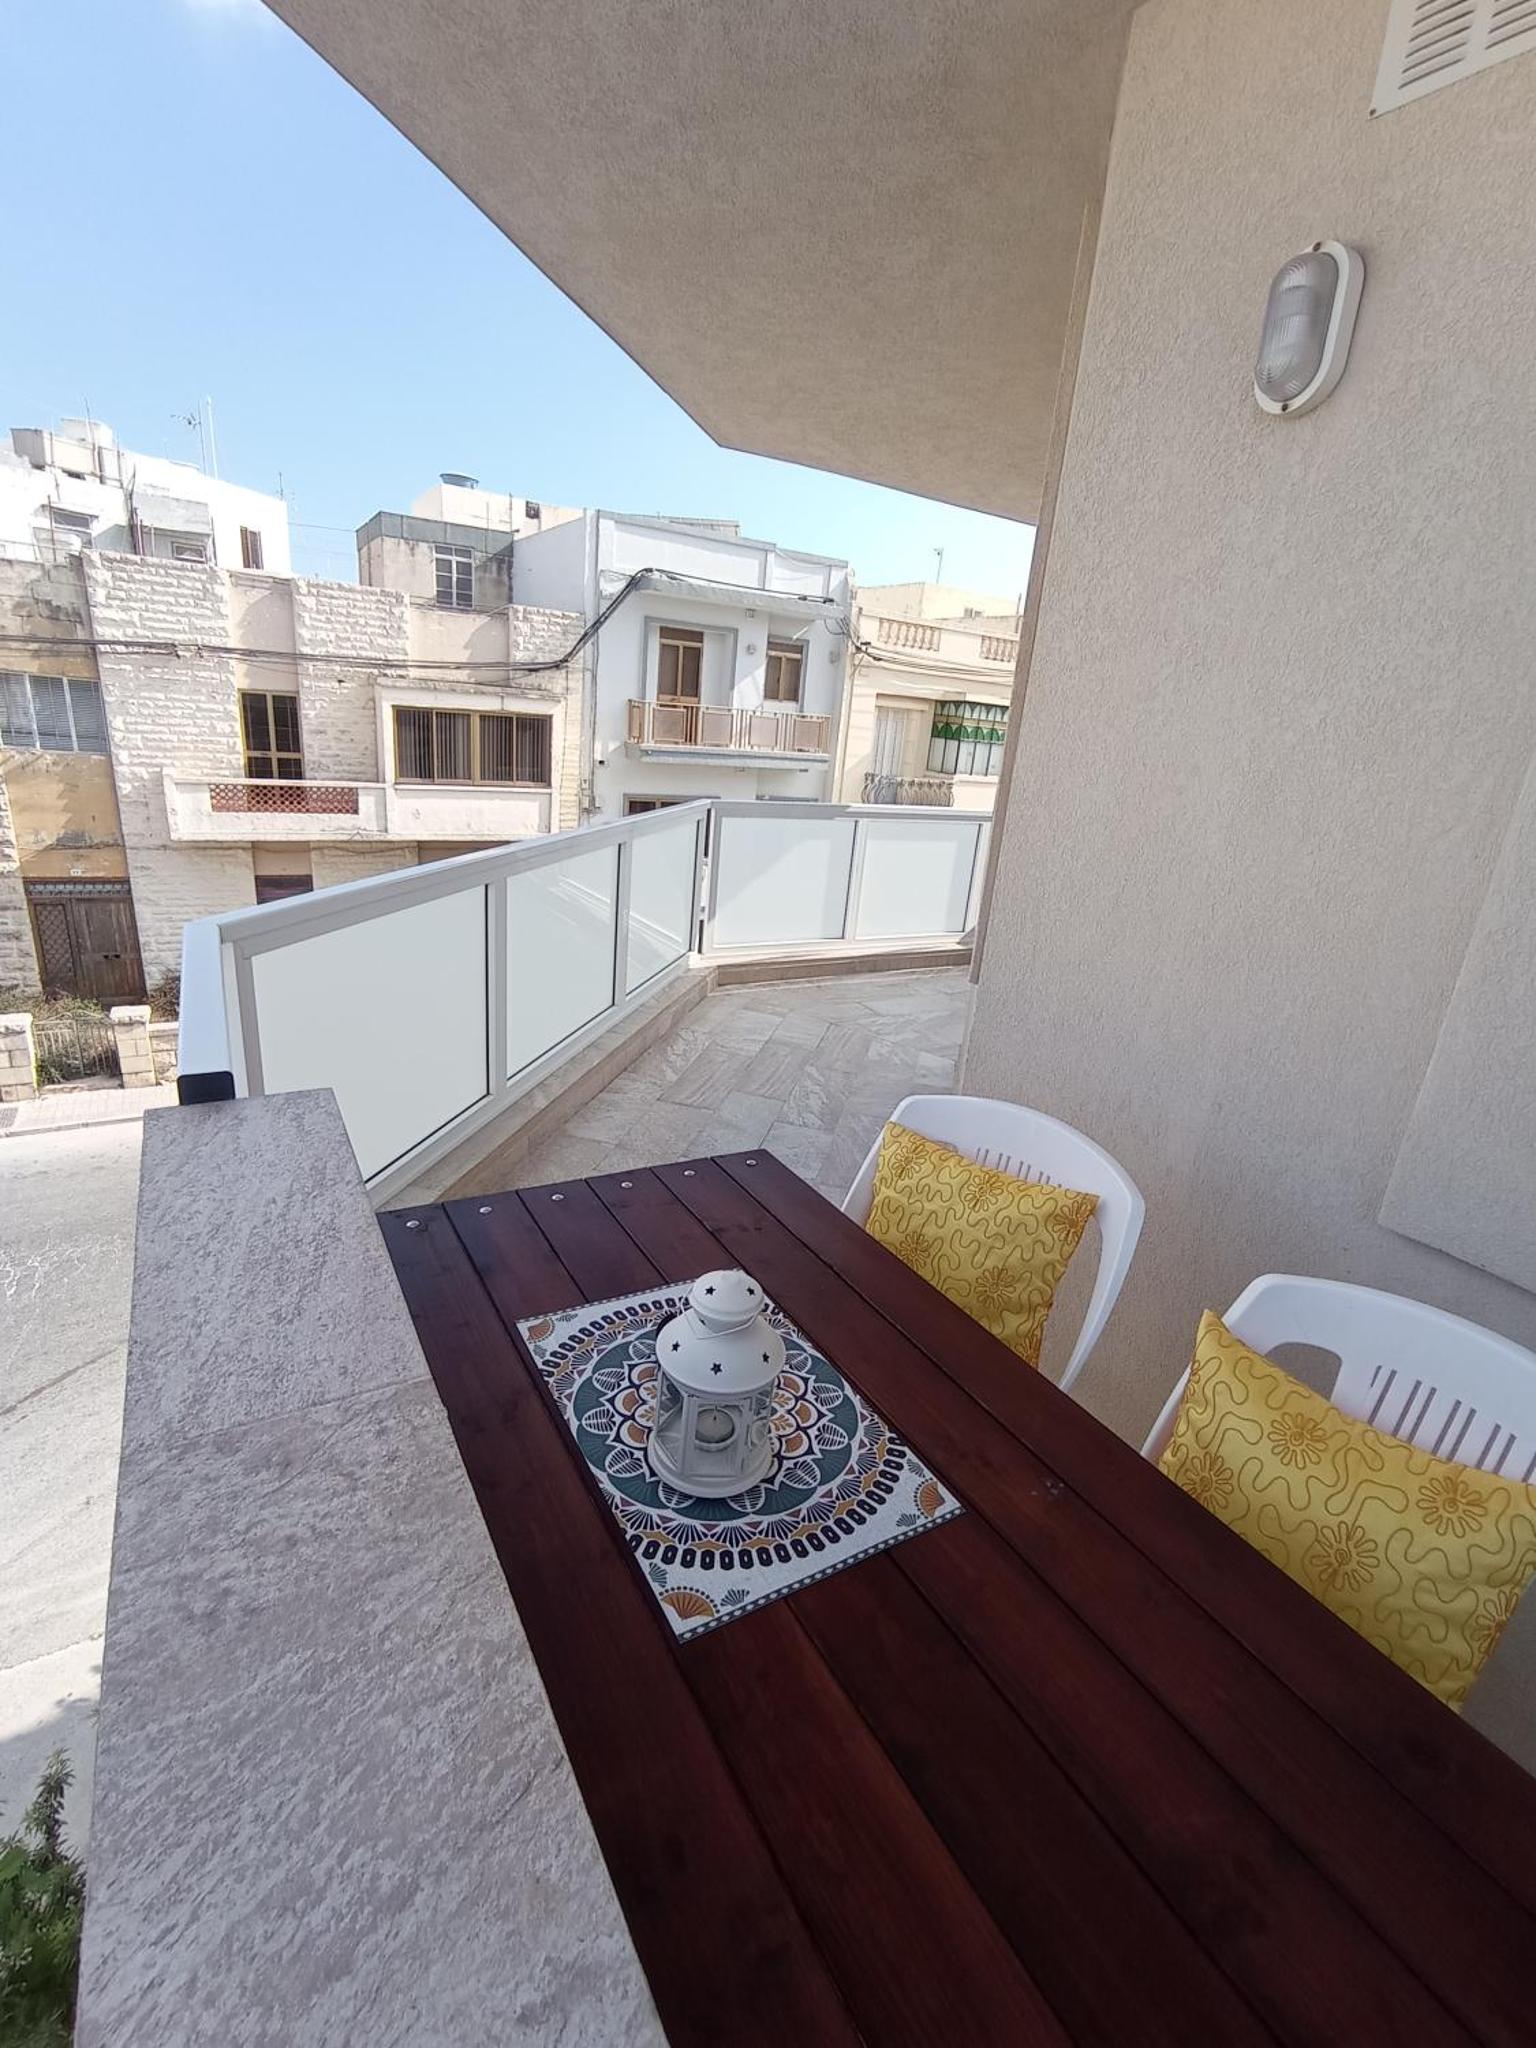 Joseph 2, Stylish and bright 2 bedroom flat with corner terrace